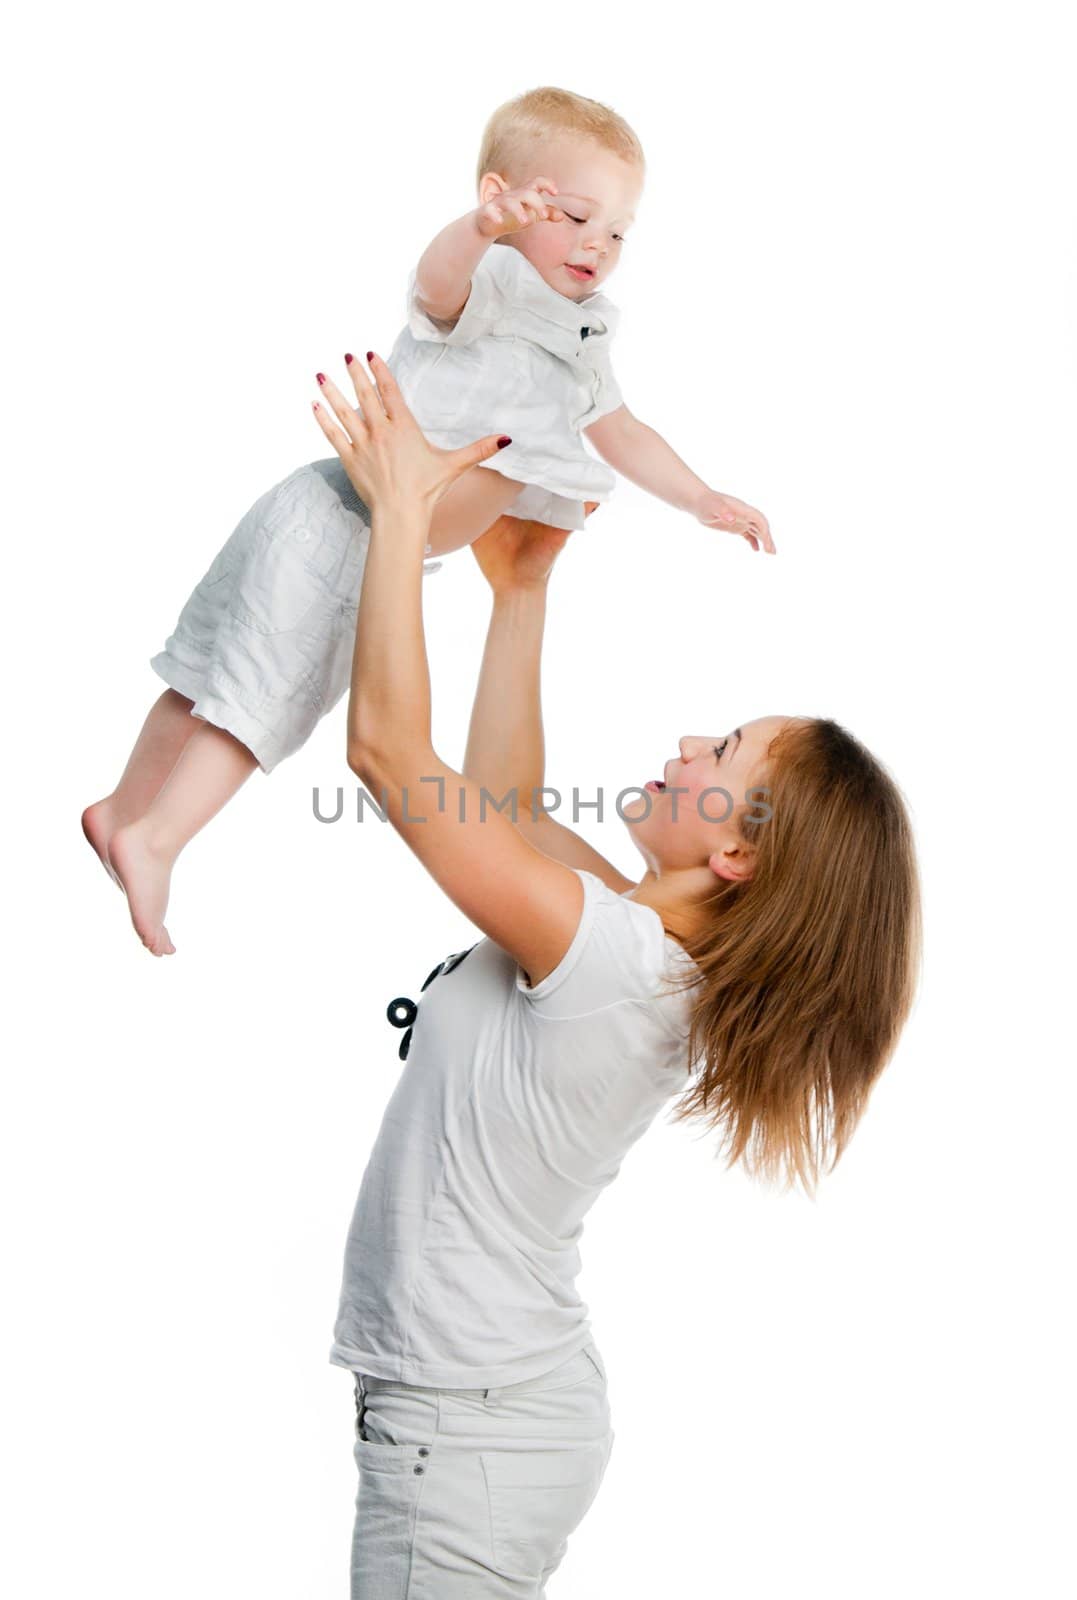 Mom raises her little boy over her head